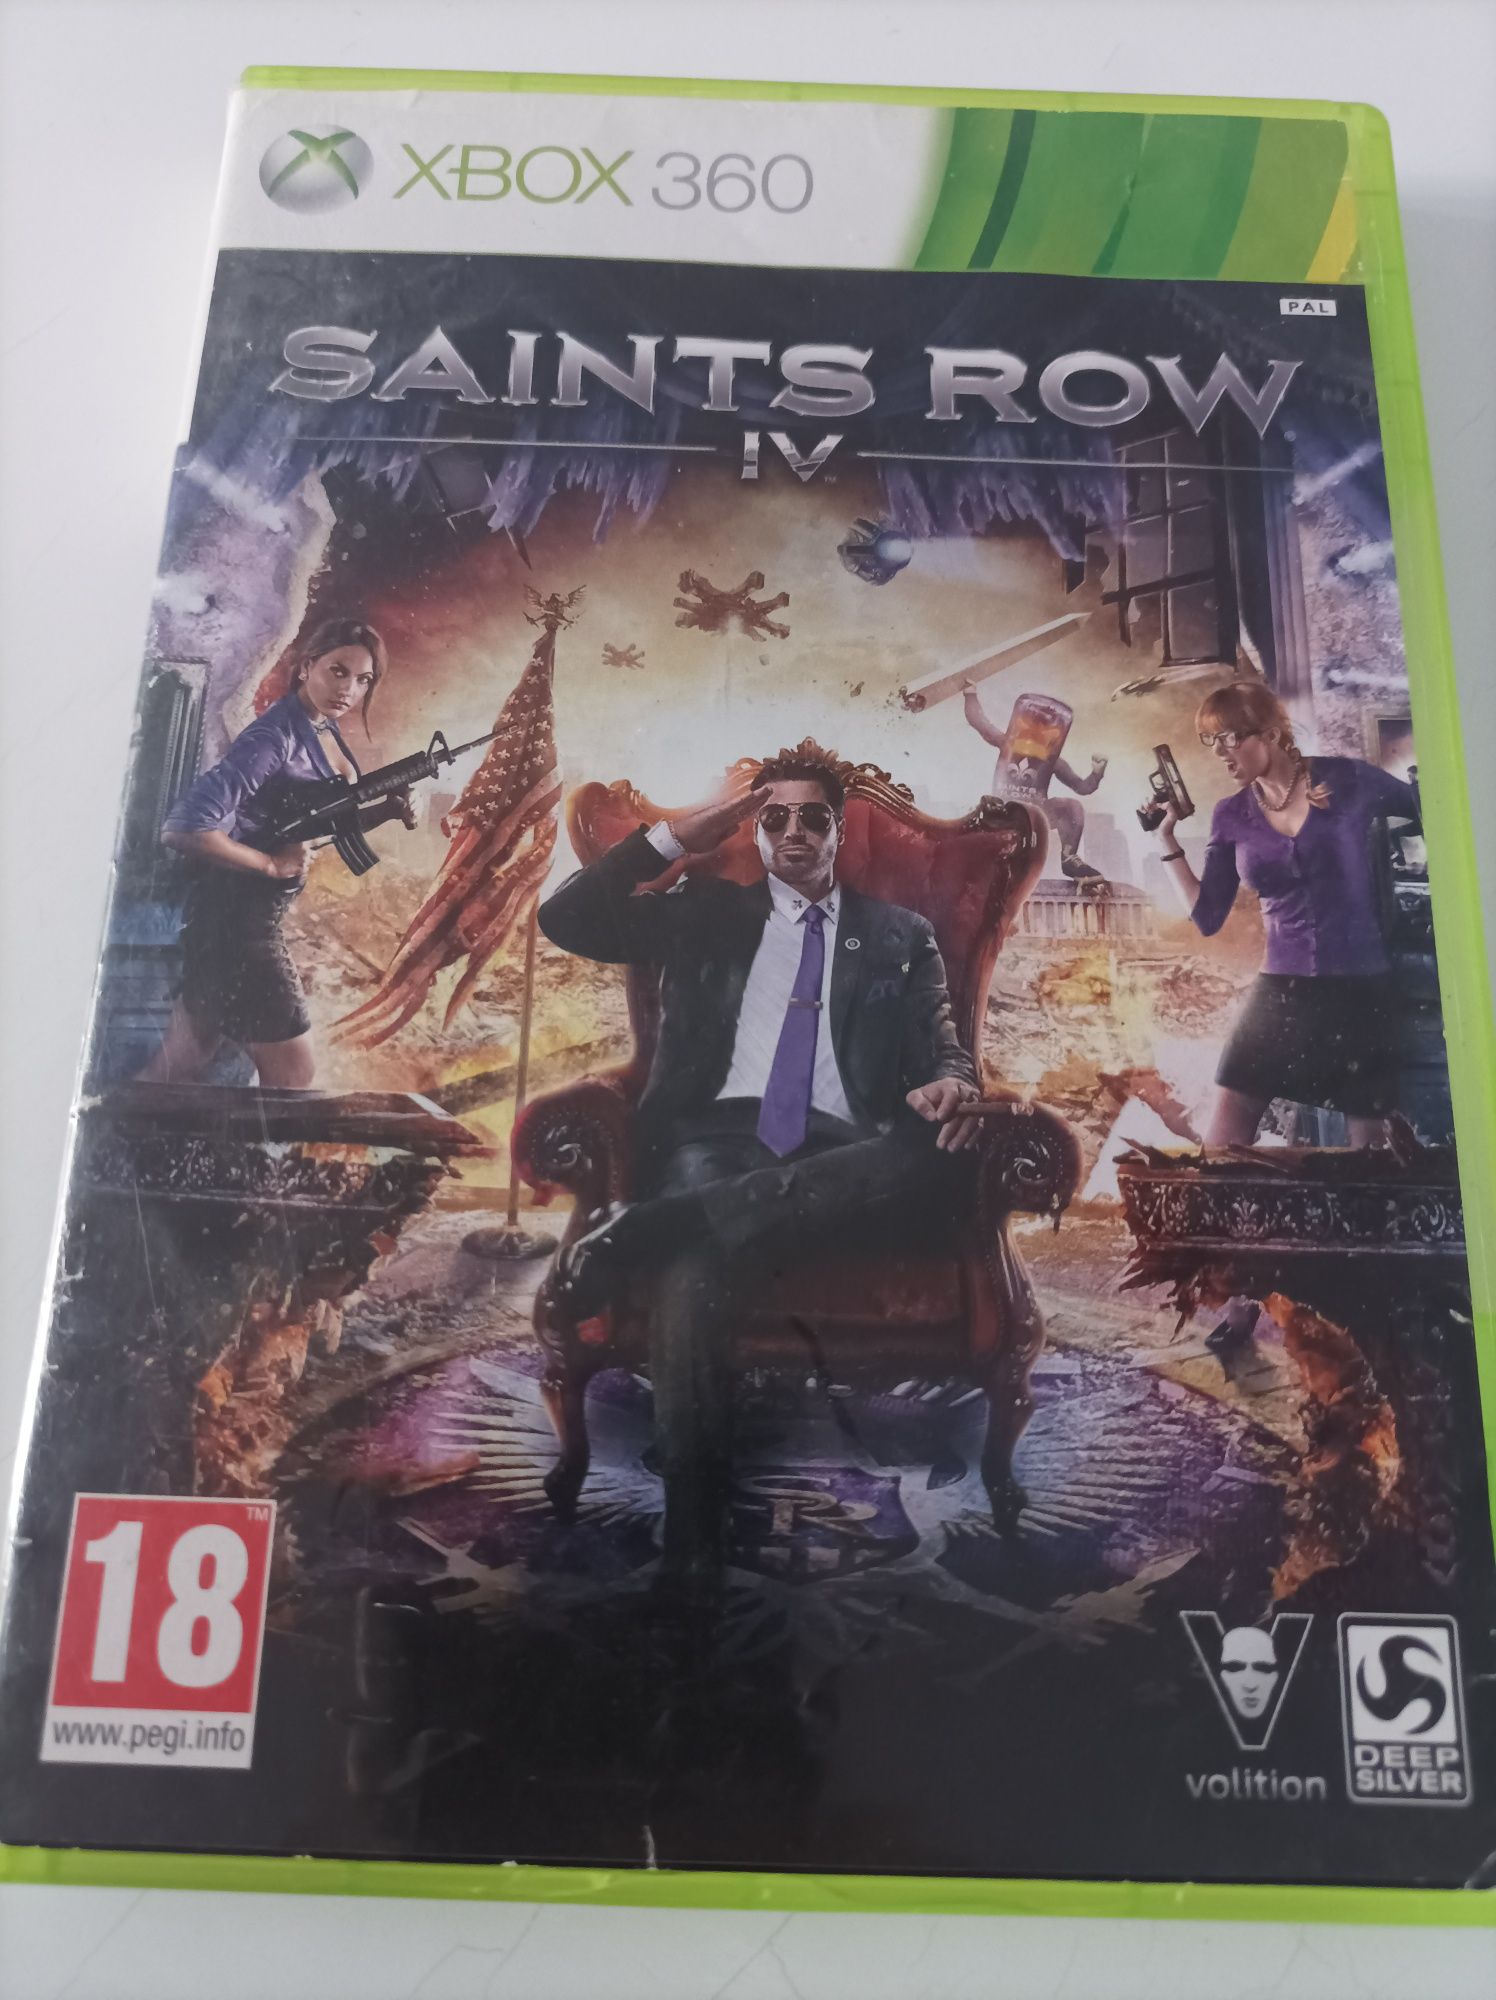 Saints row IV Xbox 360